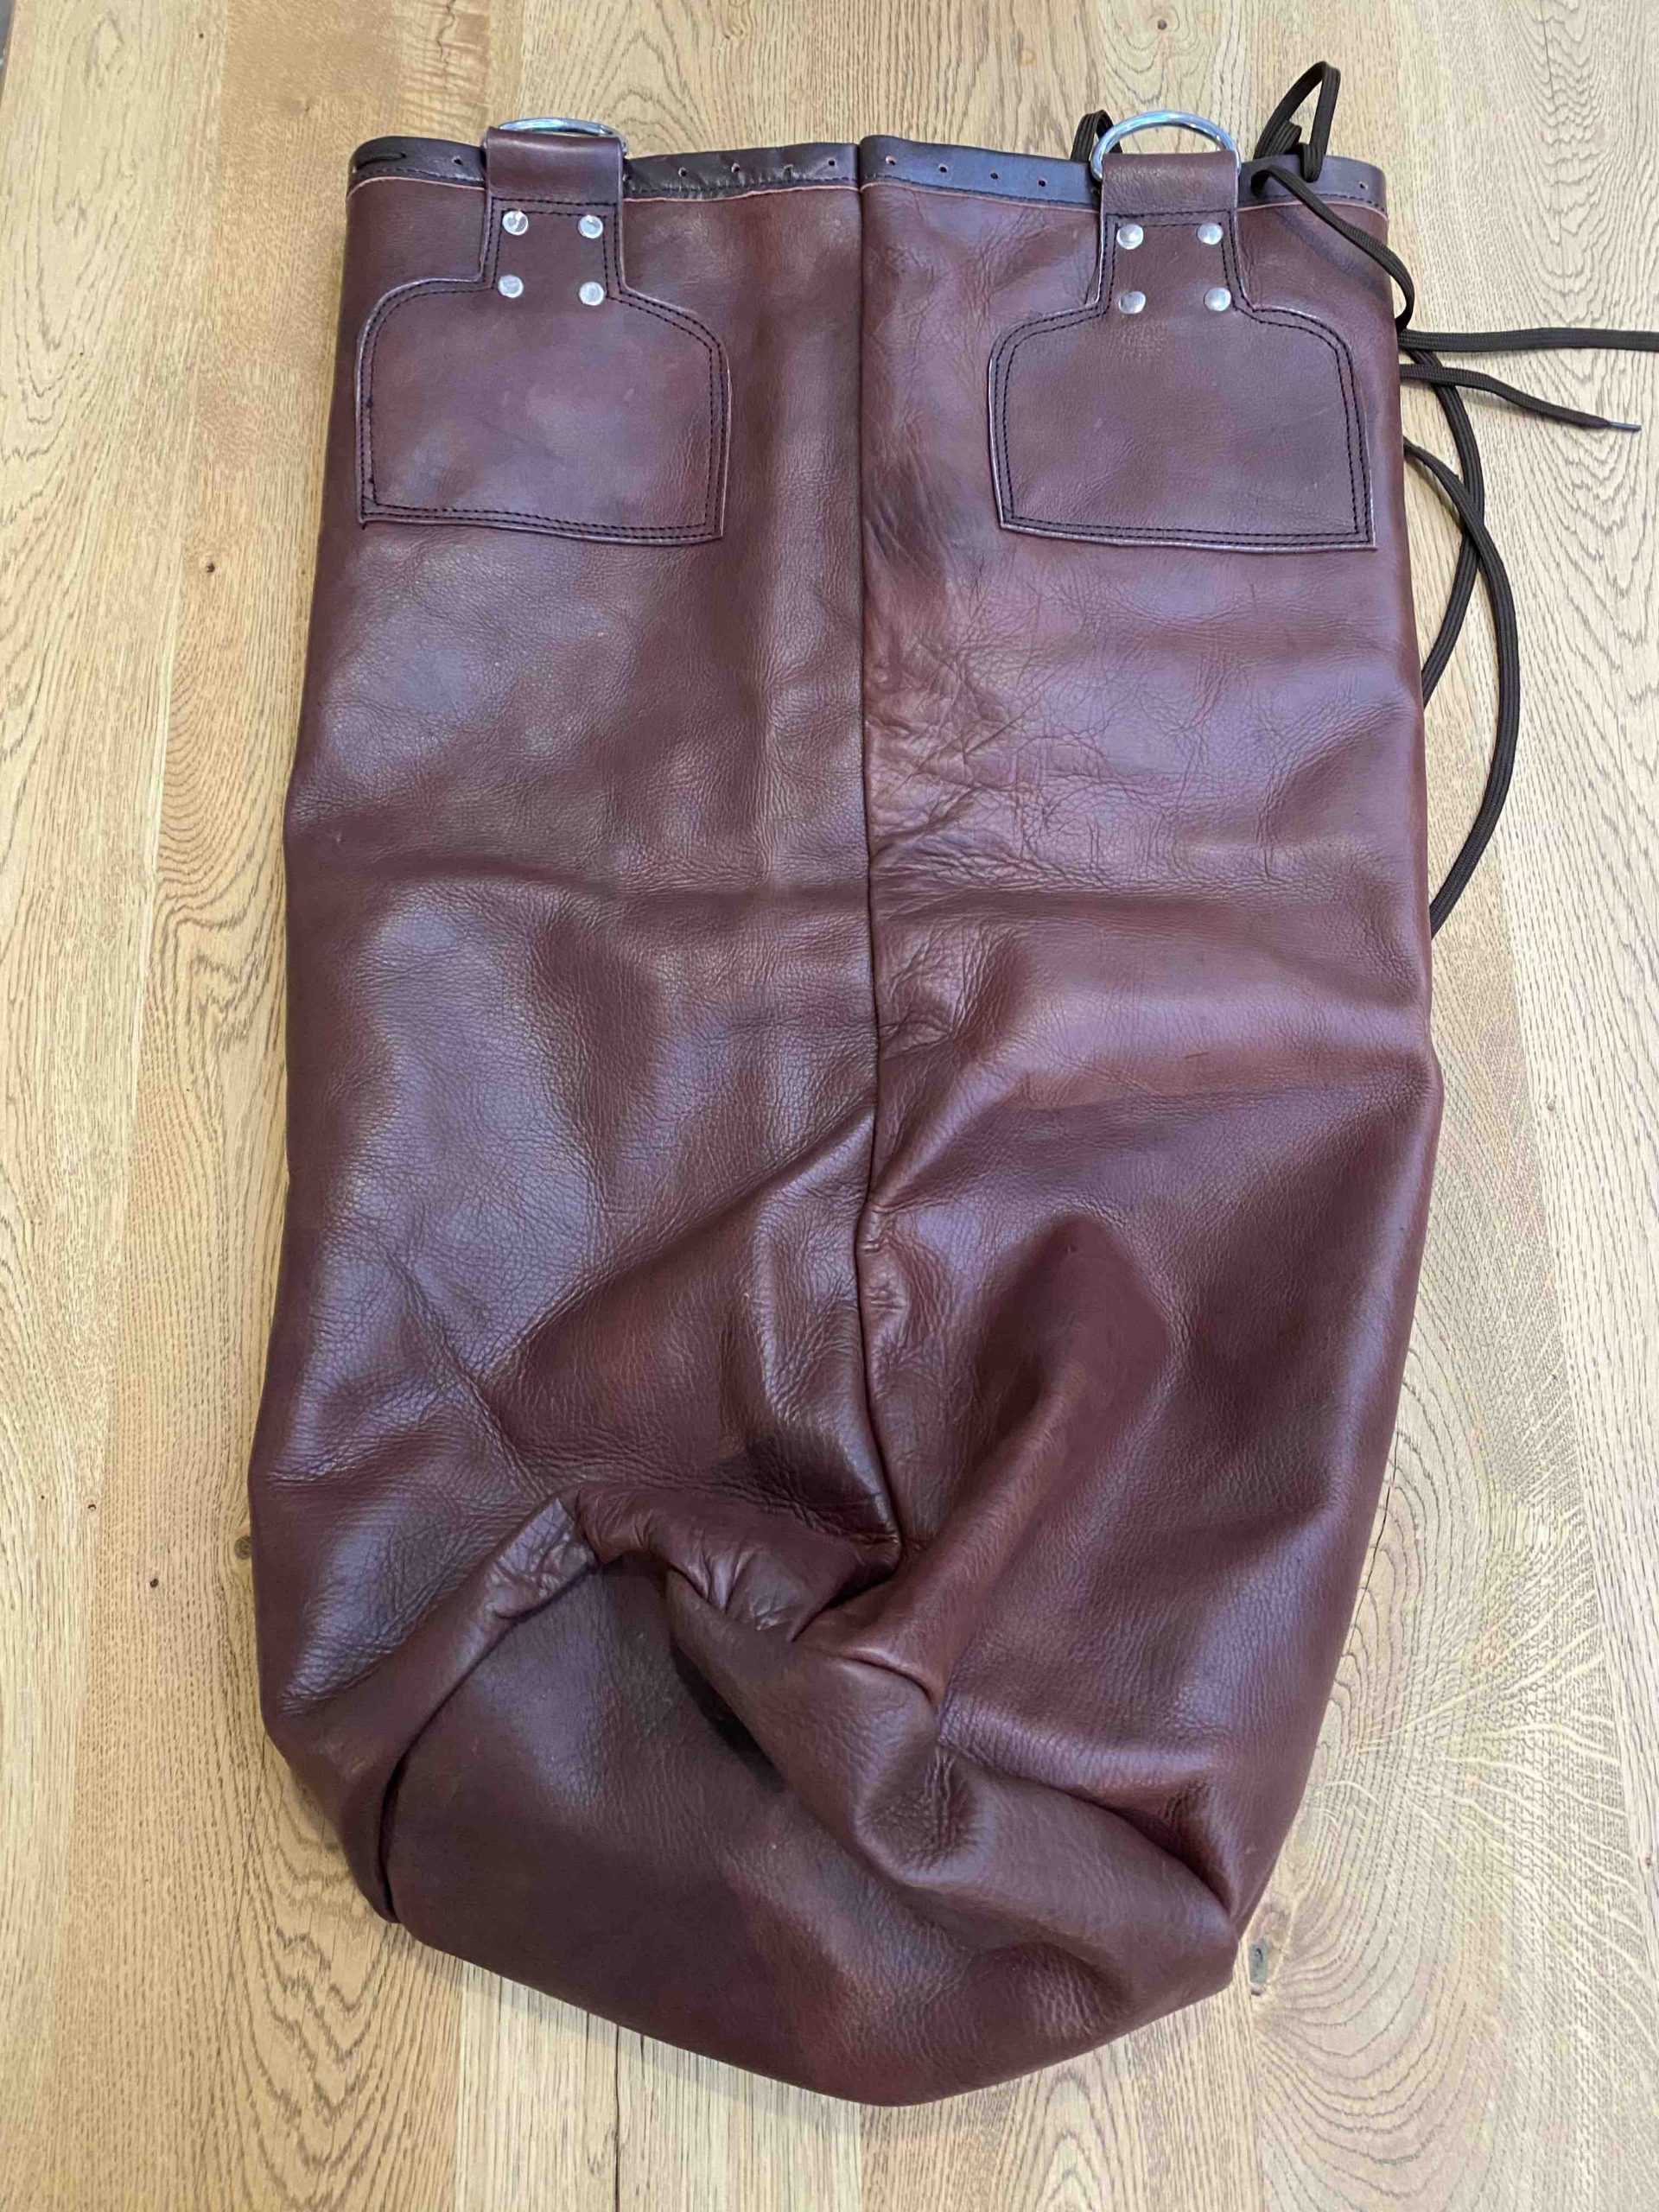 Sac de frappe cuir 150cm Métal boxe Jupiter - sac look marron vintage